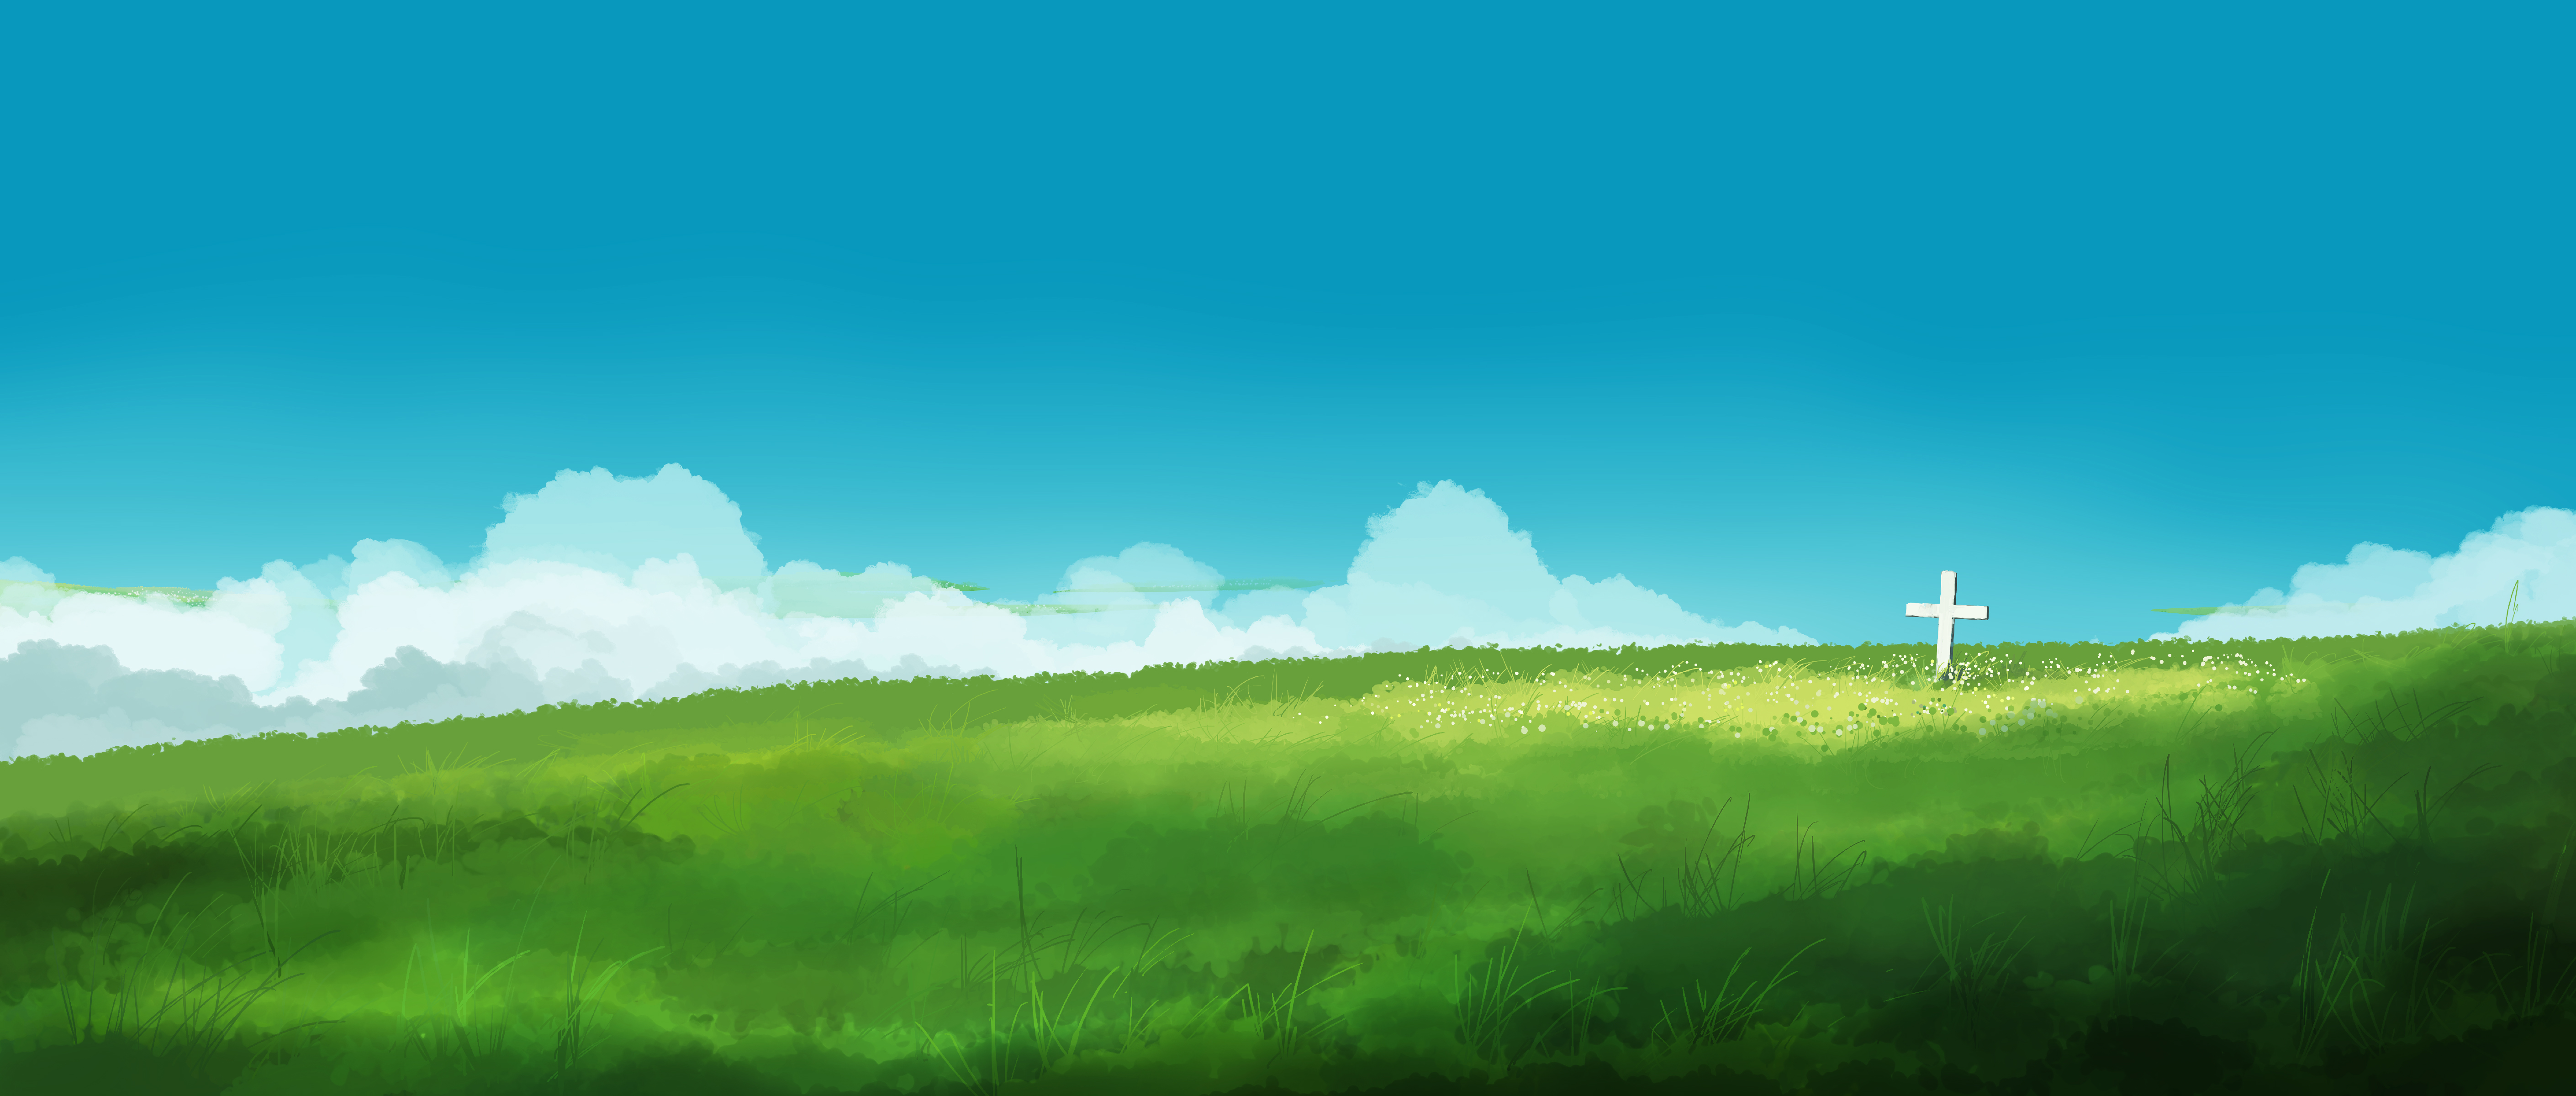 Anime Anime Sky Artwork Clouds Gracile Grass Field Cross Nature  Christianity Sky Wallpaper - Resolution:5640x2400 - ID:1357995 